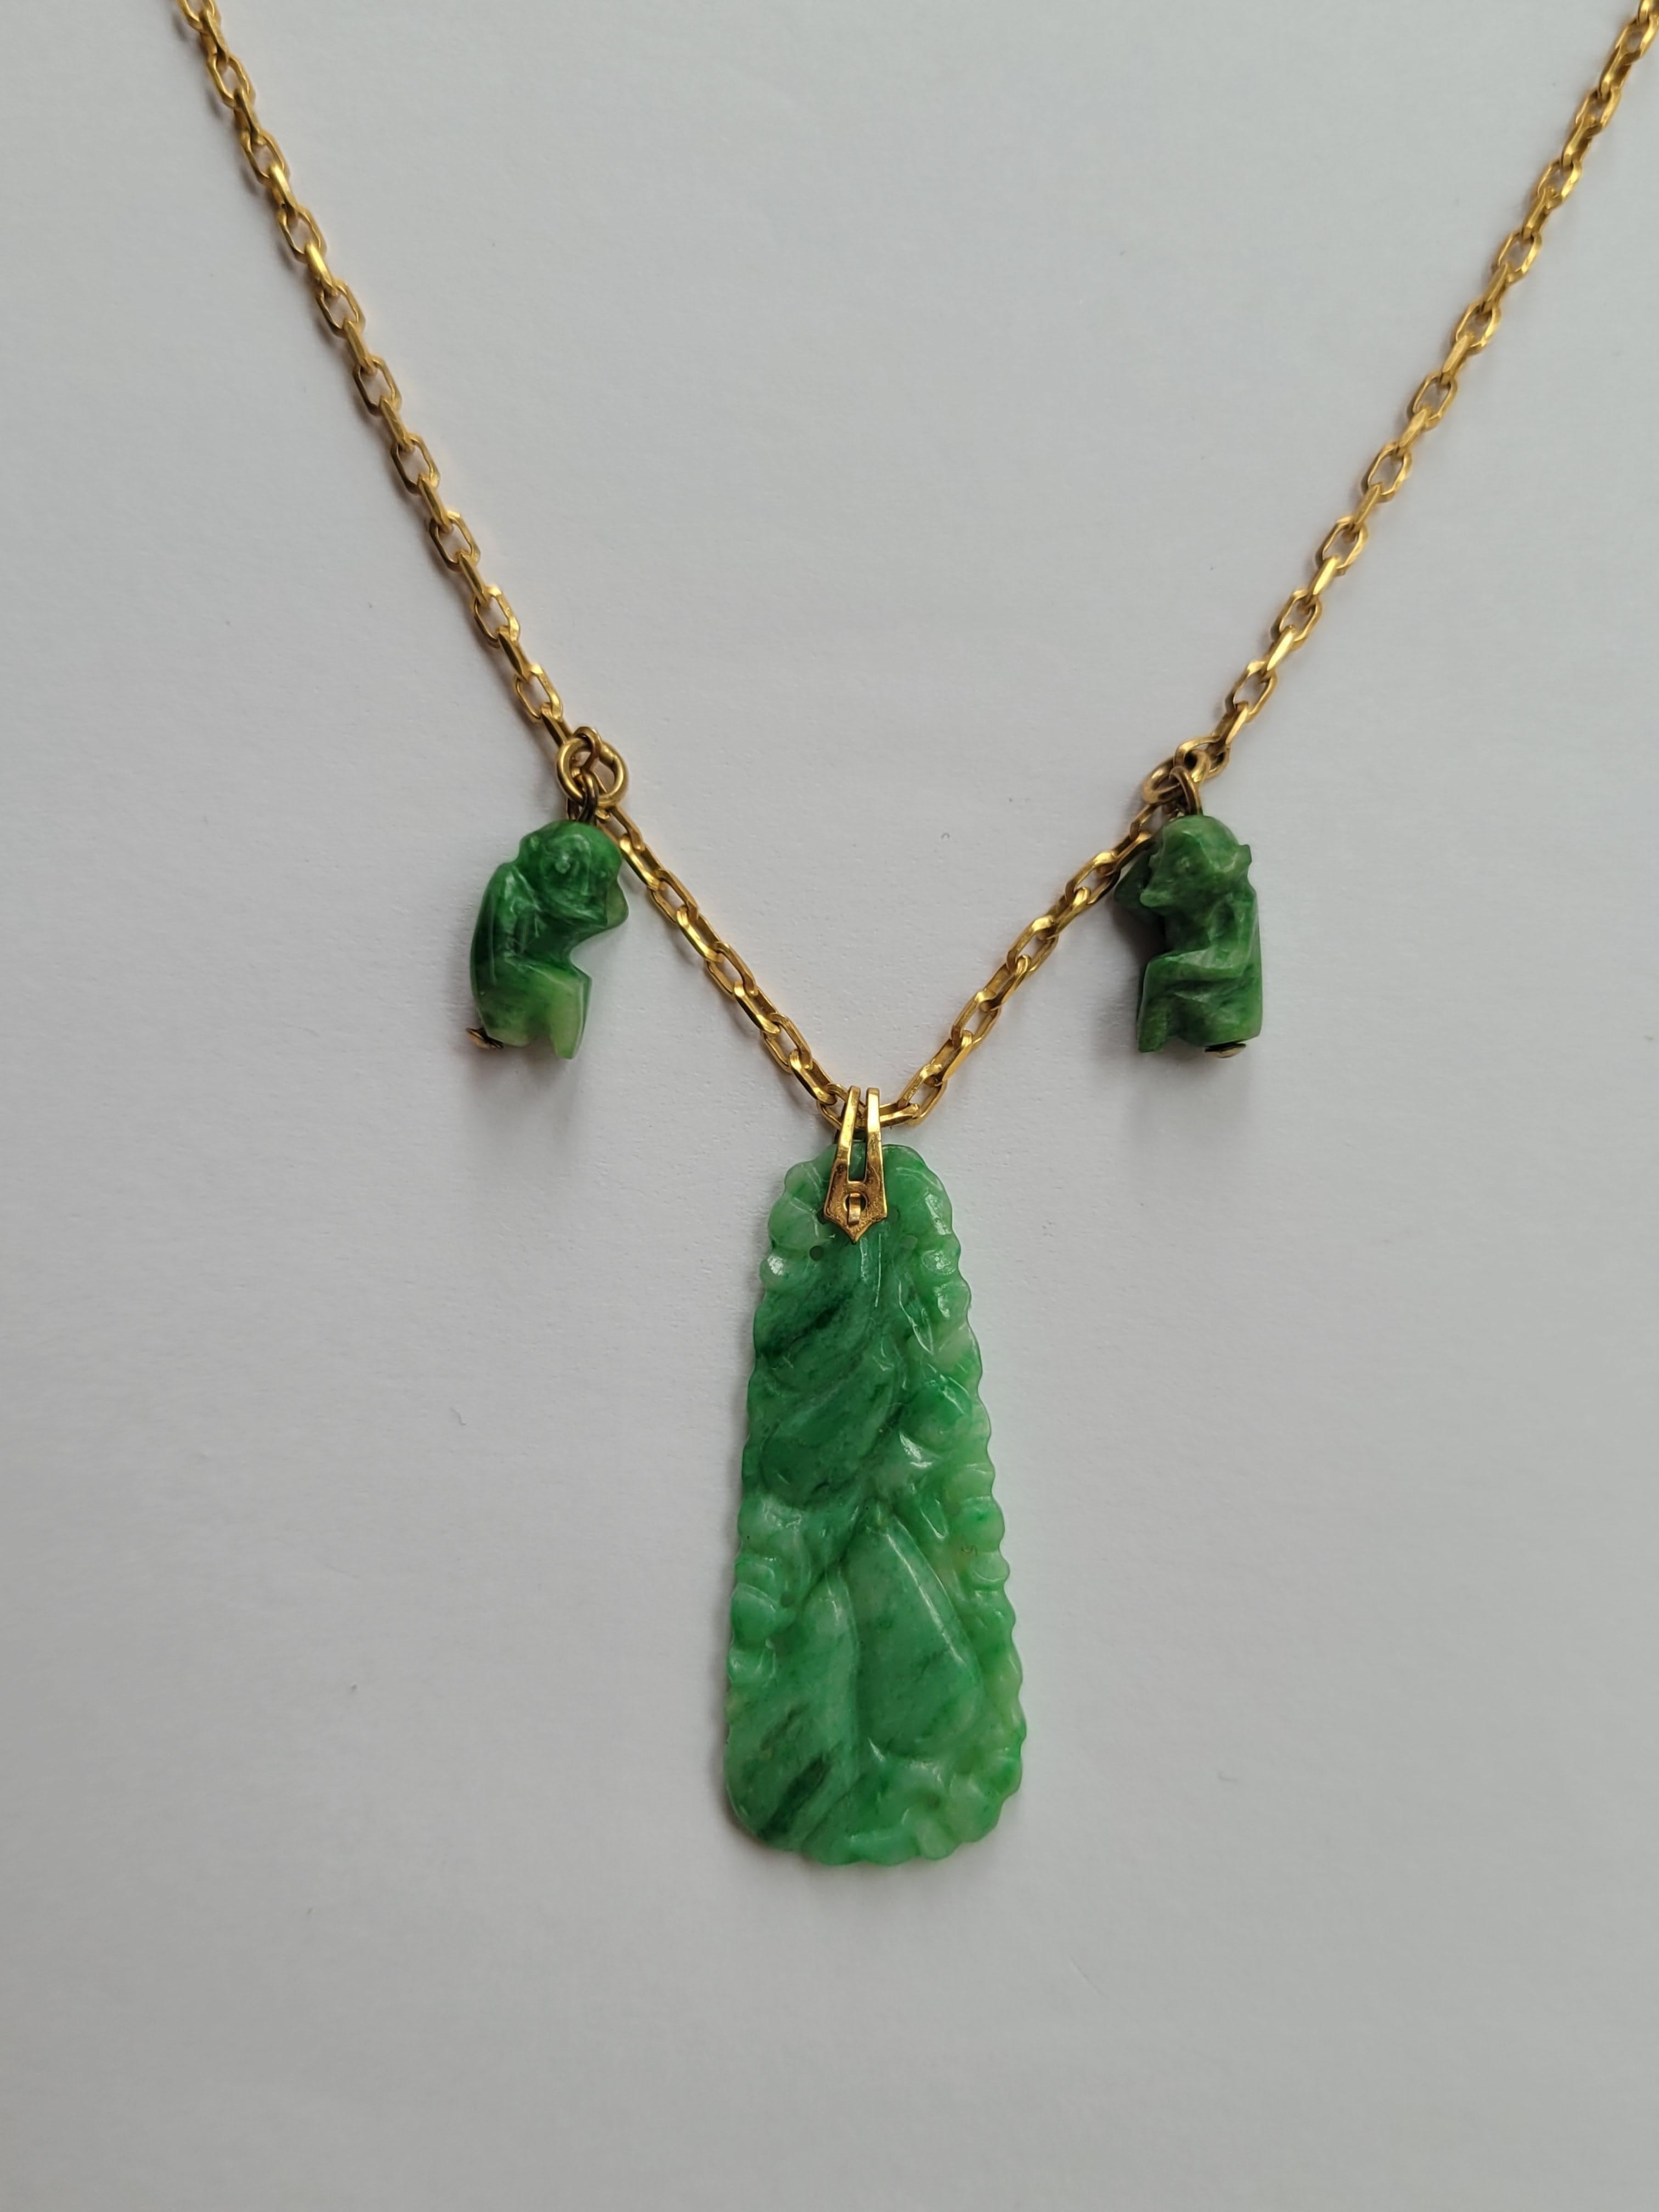 Unusual Vintage Carved Jade Monkey pendant necklace For Sale 4